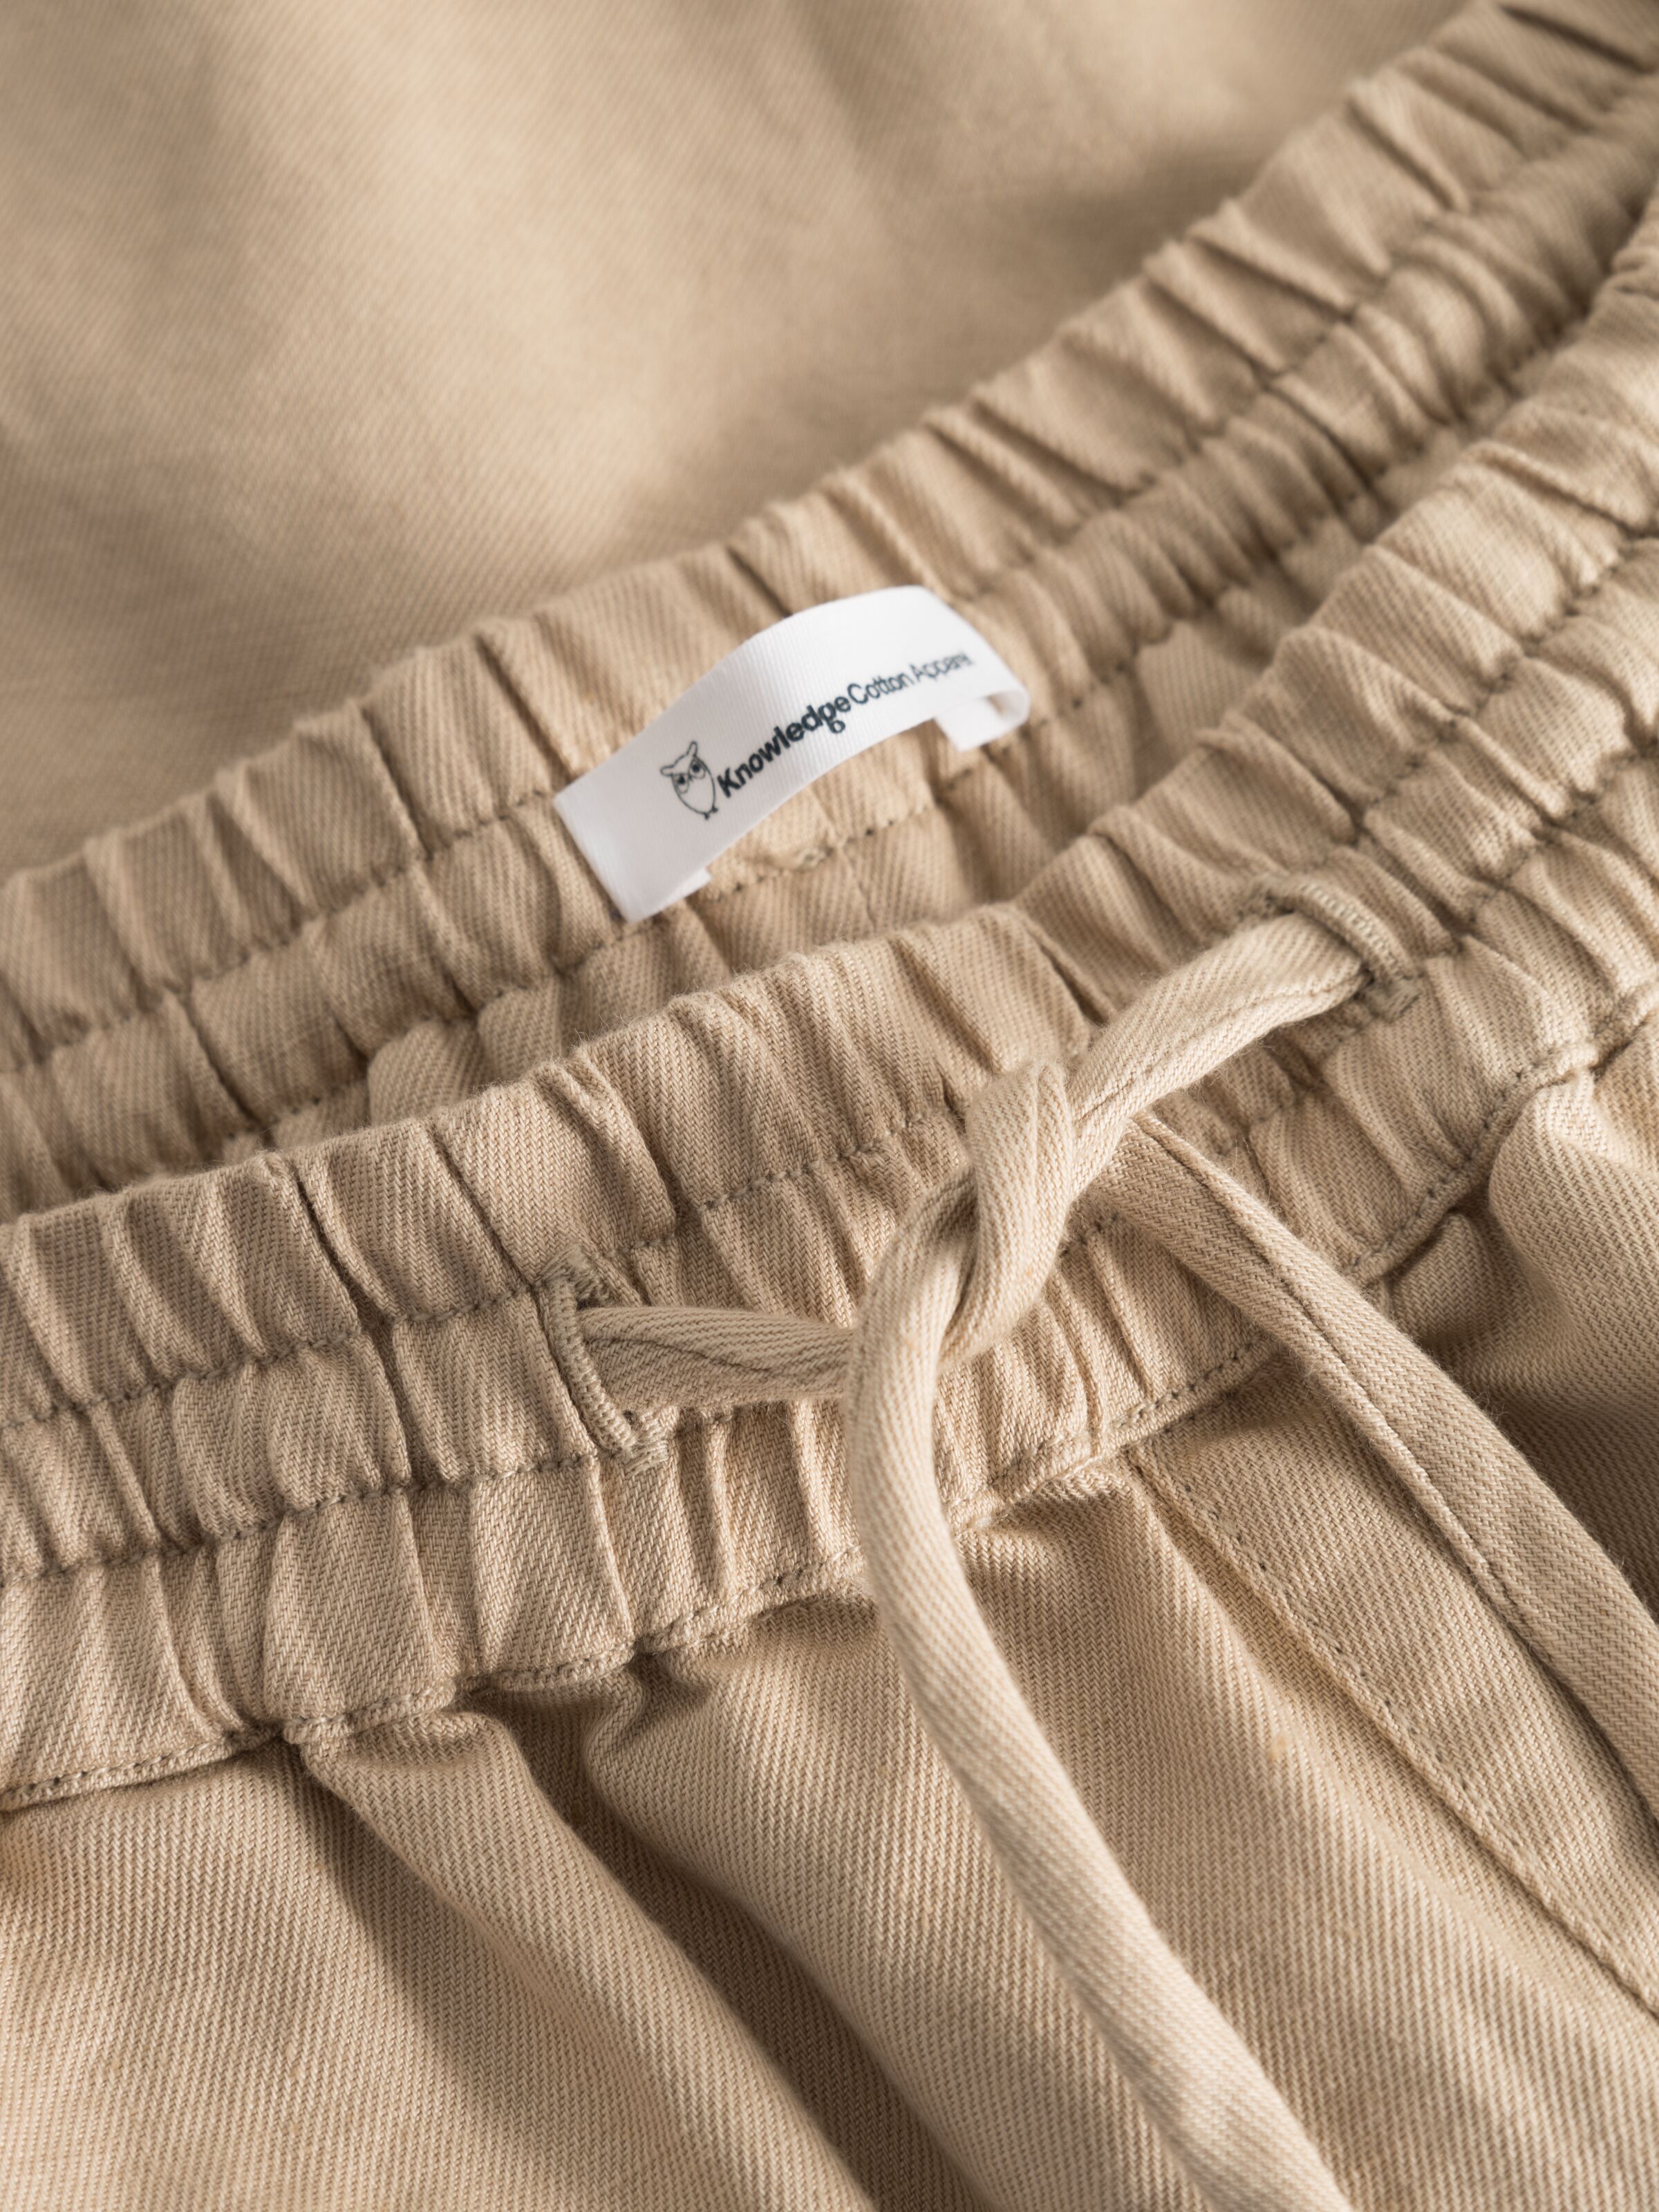 Shorts Cotton Linen Blend Safari